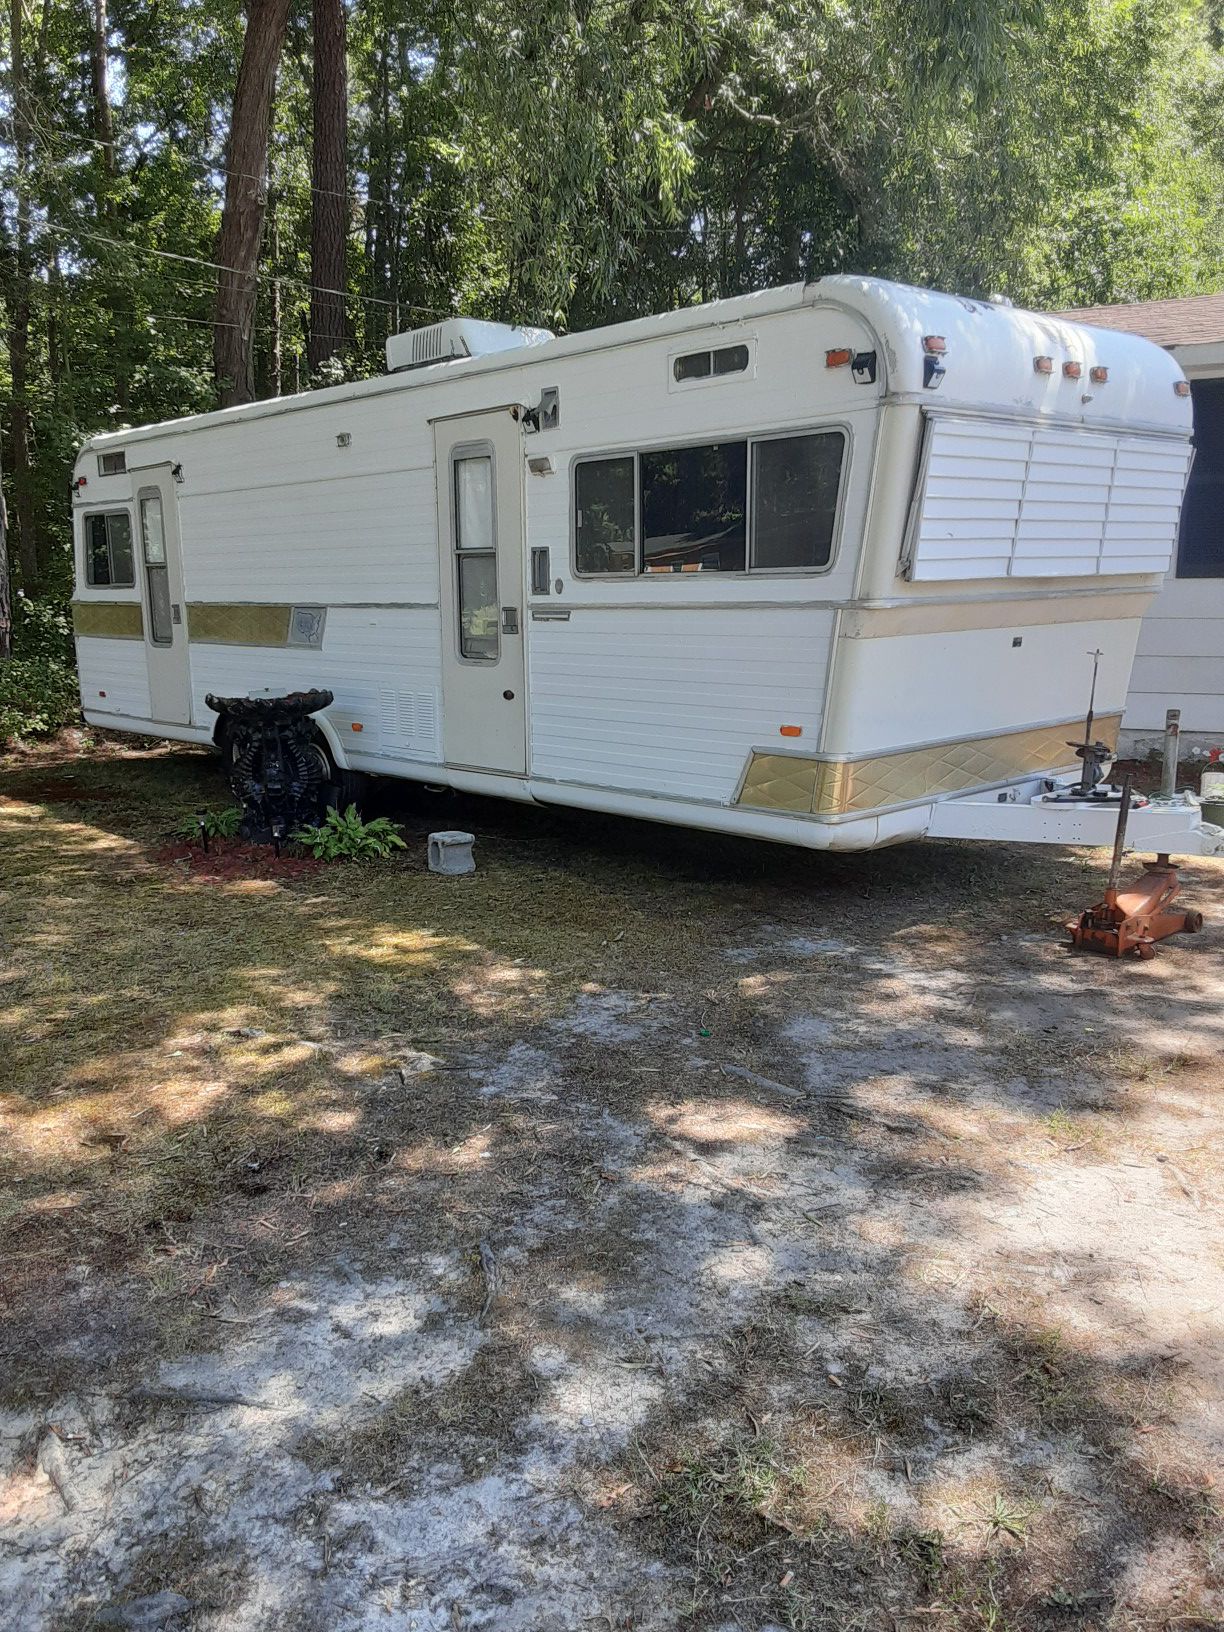 Holiday rambler camper trailer $2000